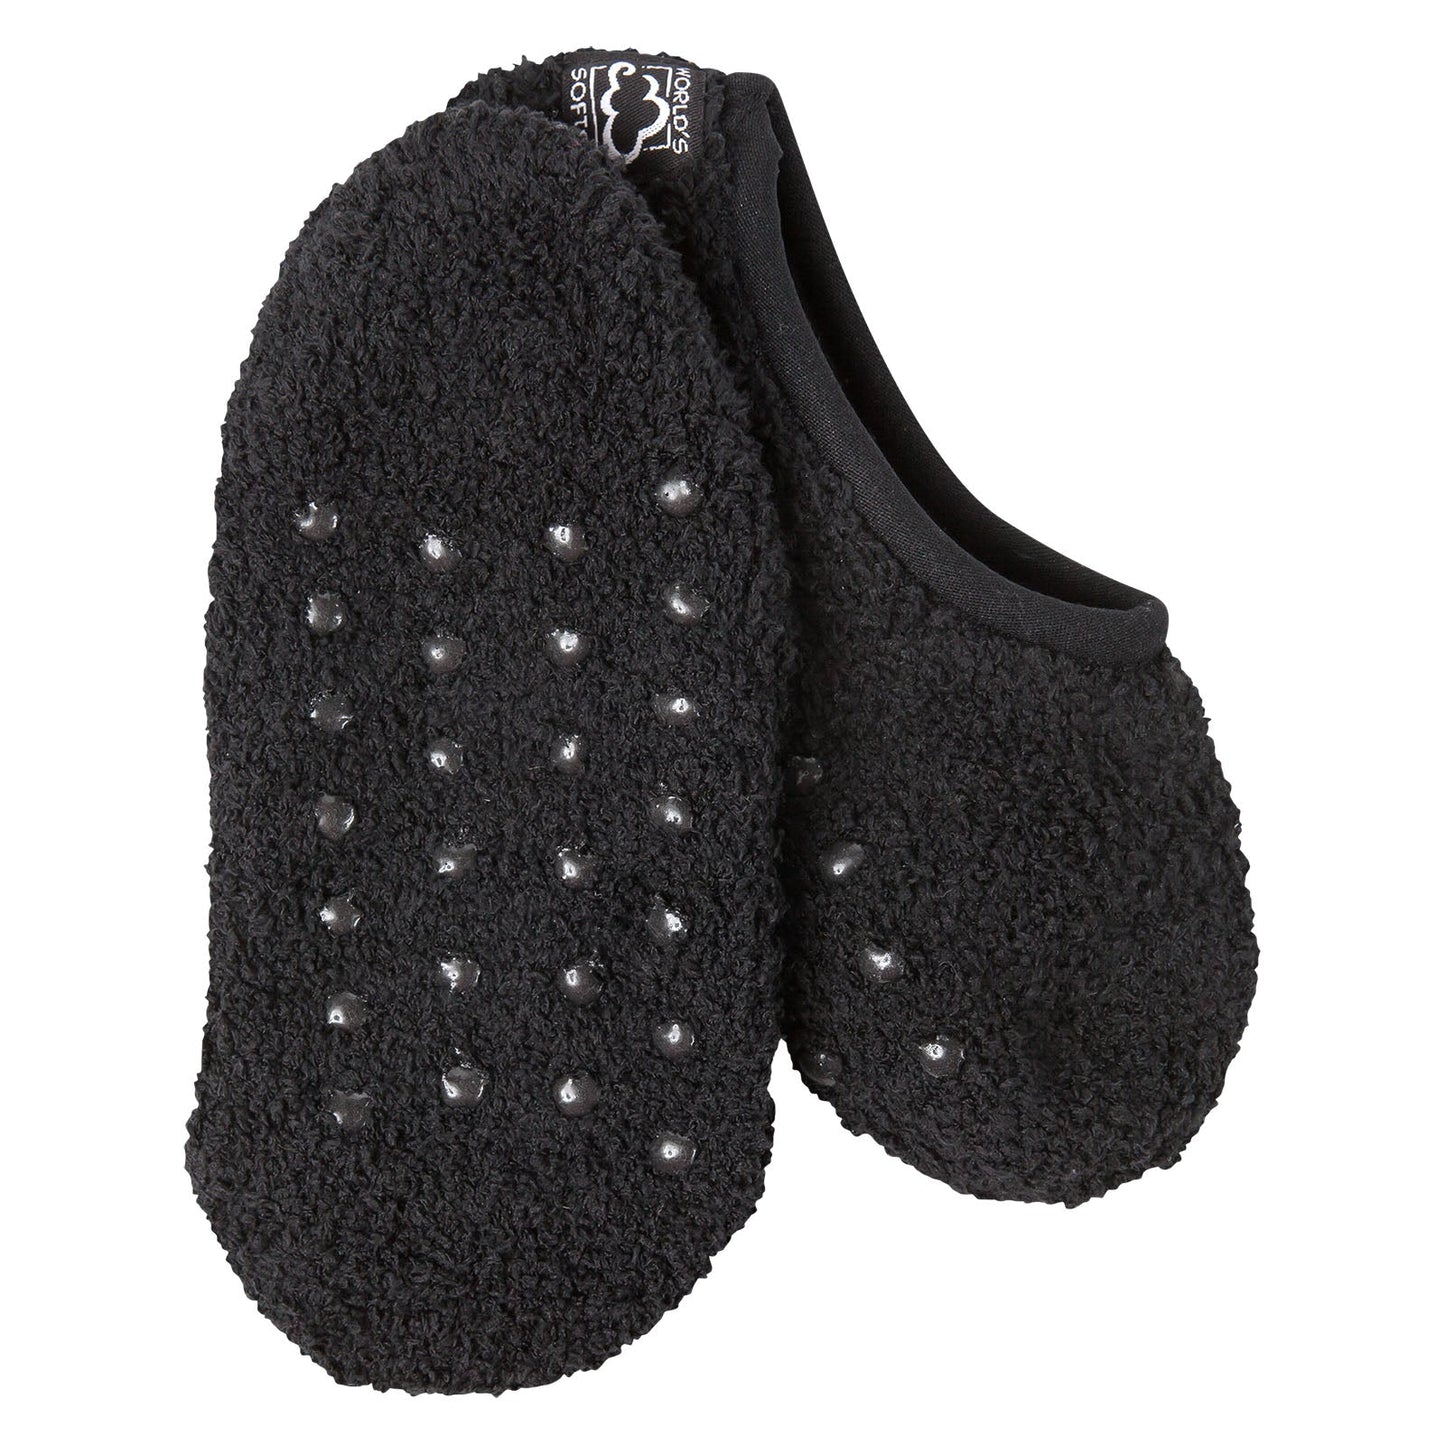 World's Softest Socks Cozy Footsie w/ Grippers